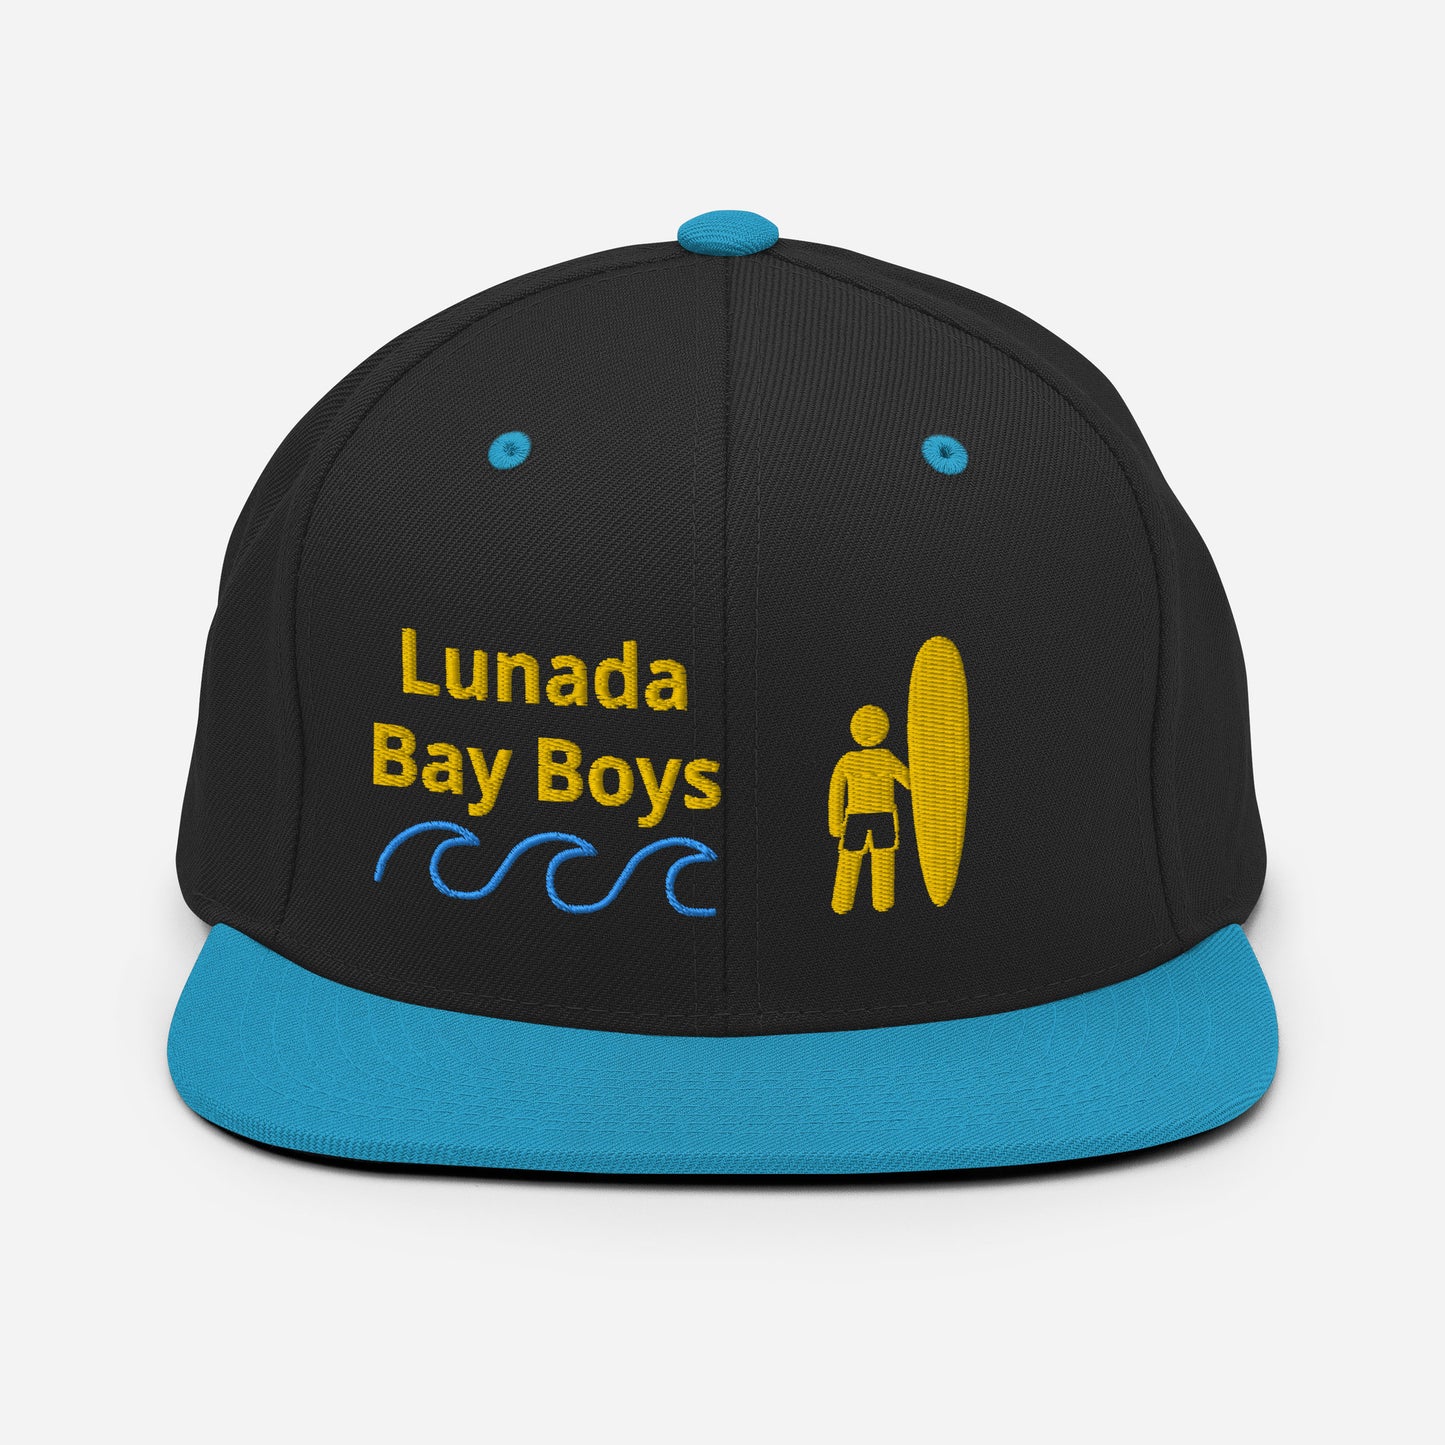 Lunada Bay Boys Palos Verdes  - California - South Bay - Snapback Hat - Surfing Style PVE (Bay Boy Picture on Back)